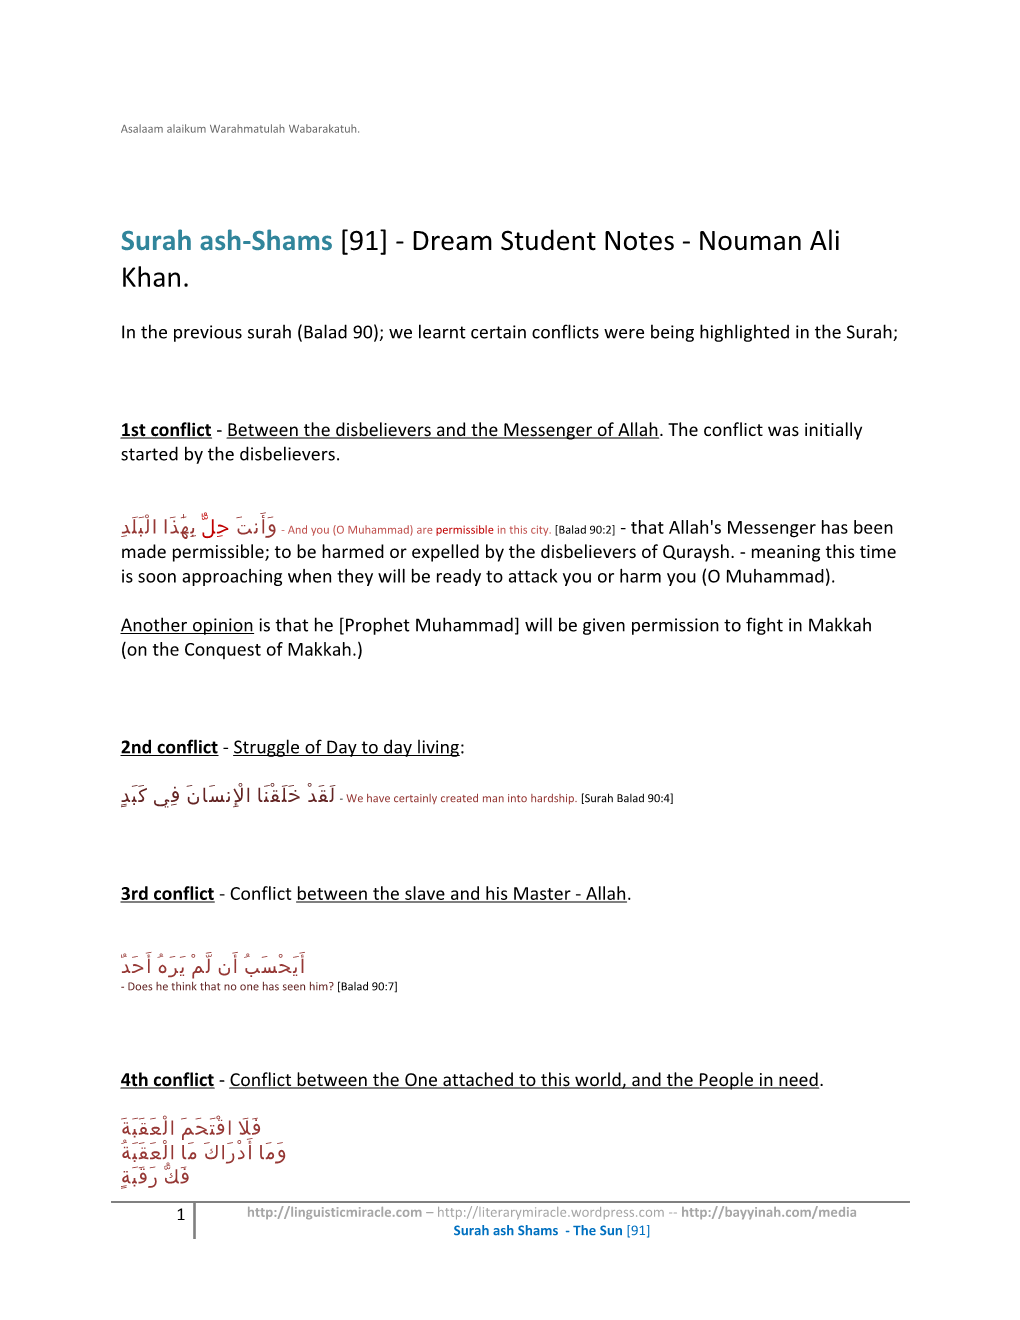 Surah Ash-Shams [91] - Dream Student Notes - Nouman Ali Khan